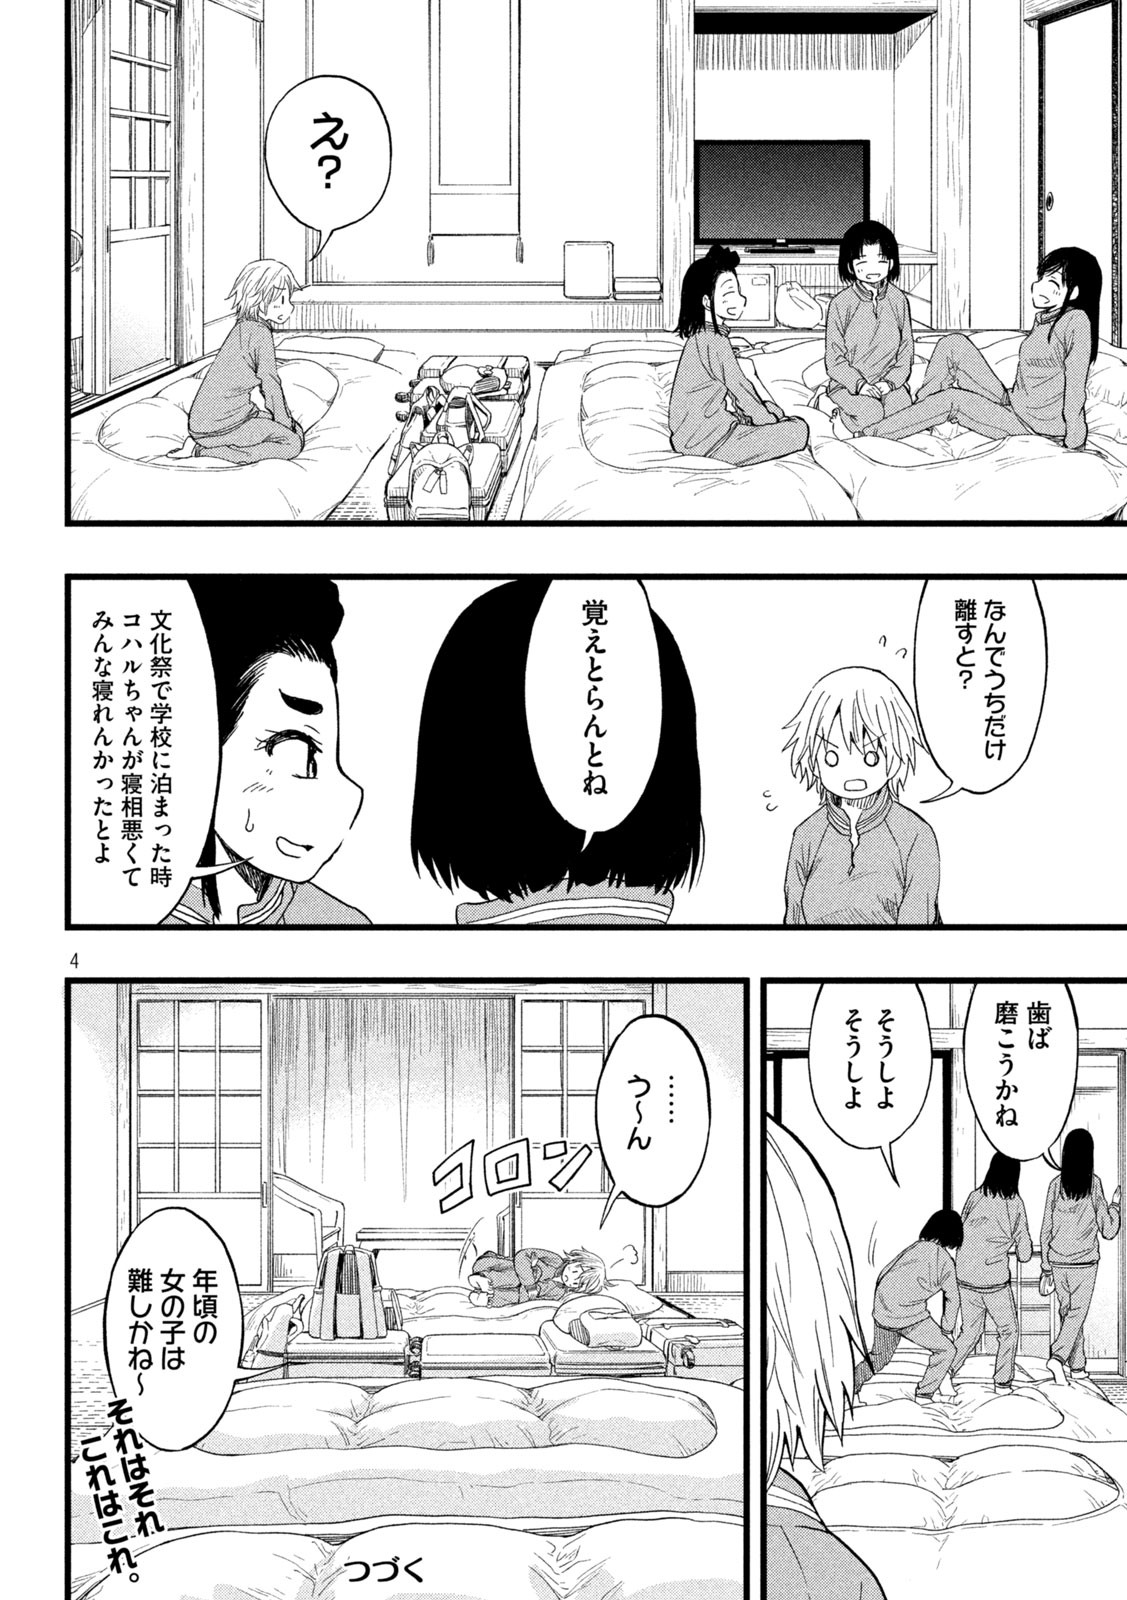 Koharu haru! - Chapter 67 - Page 4